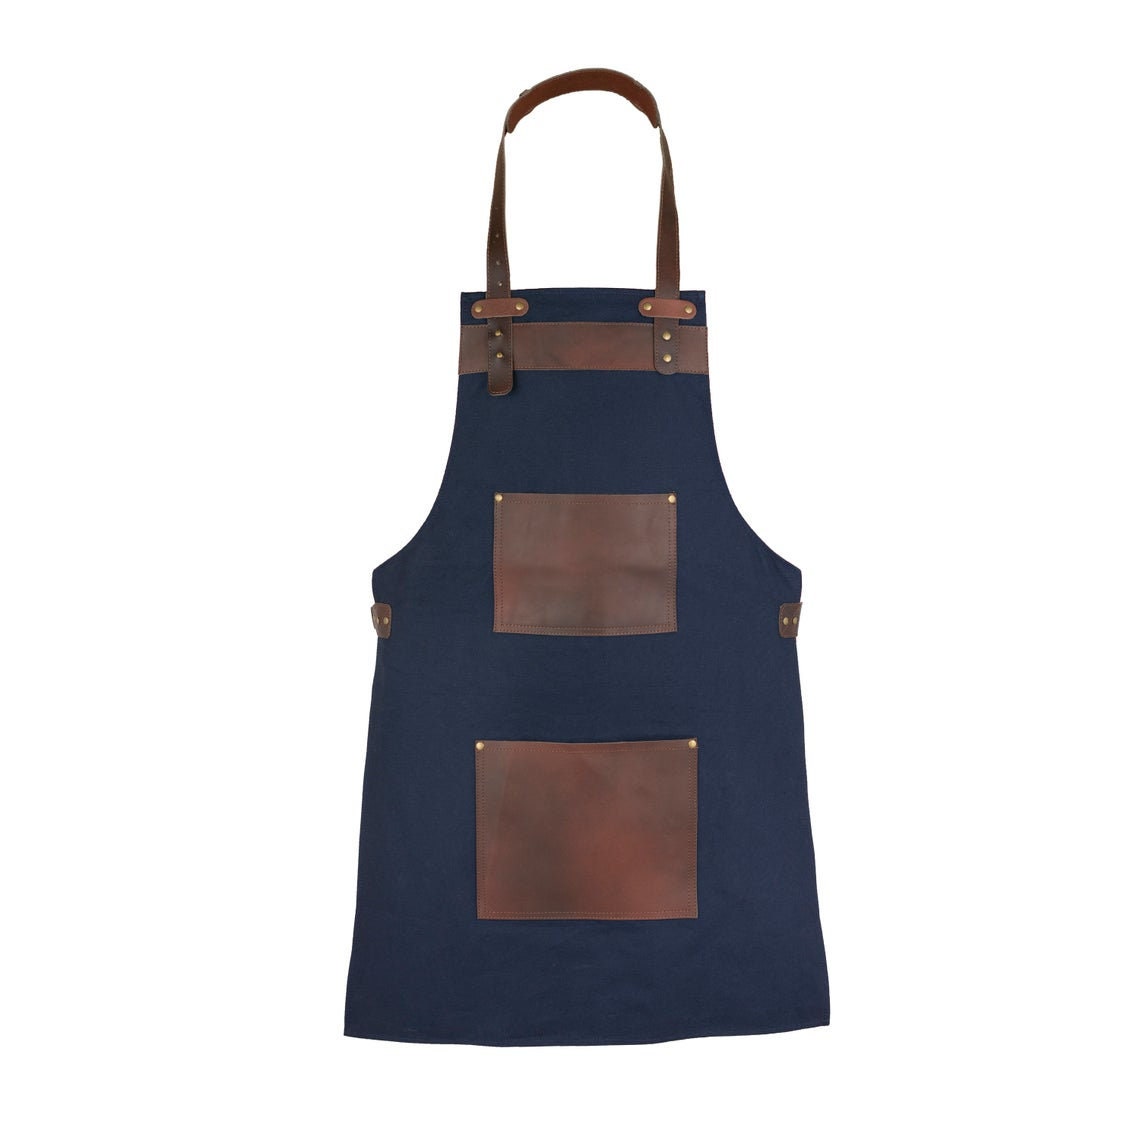 tablier en toile bleue avec poches cuir véritable - tablier de boucher barbecue cuisinier